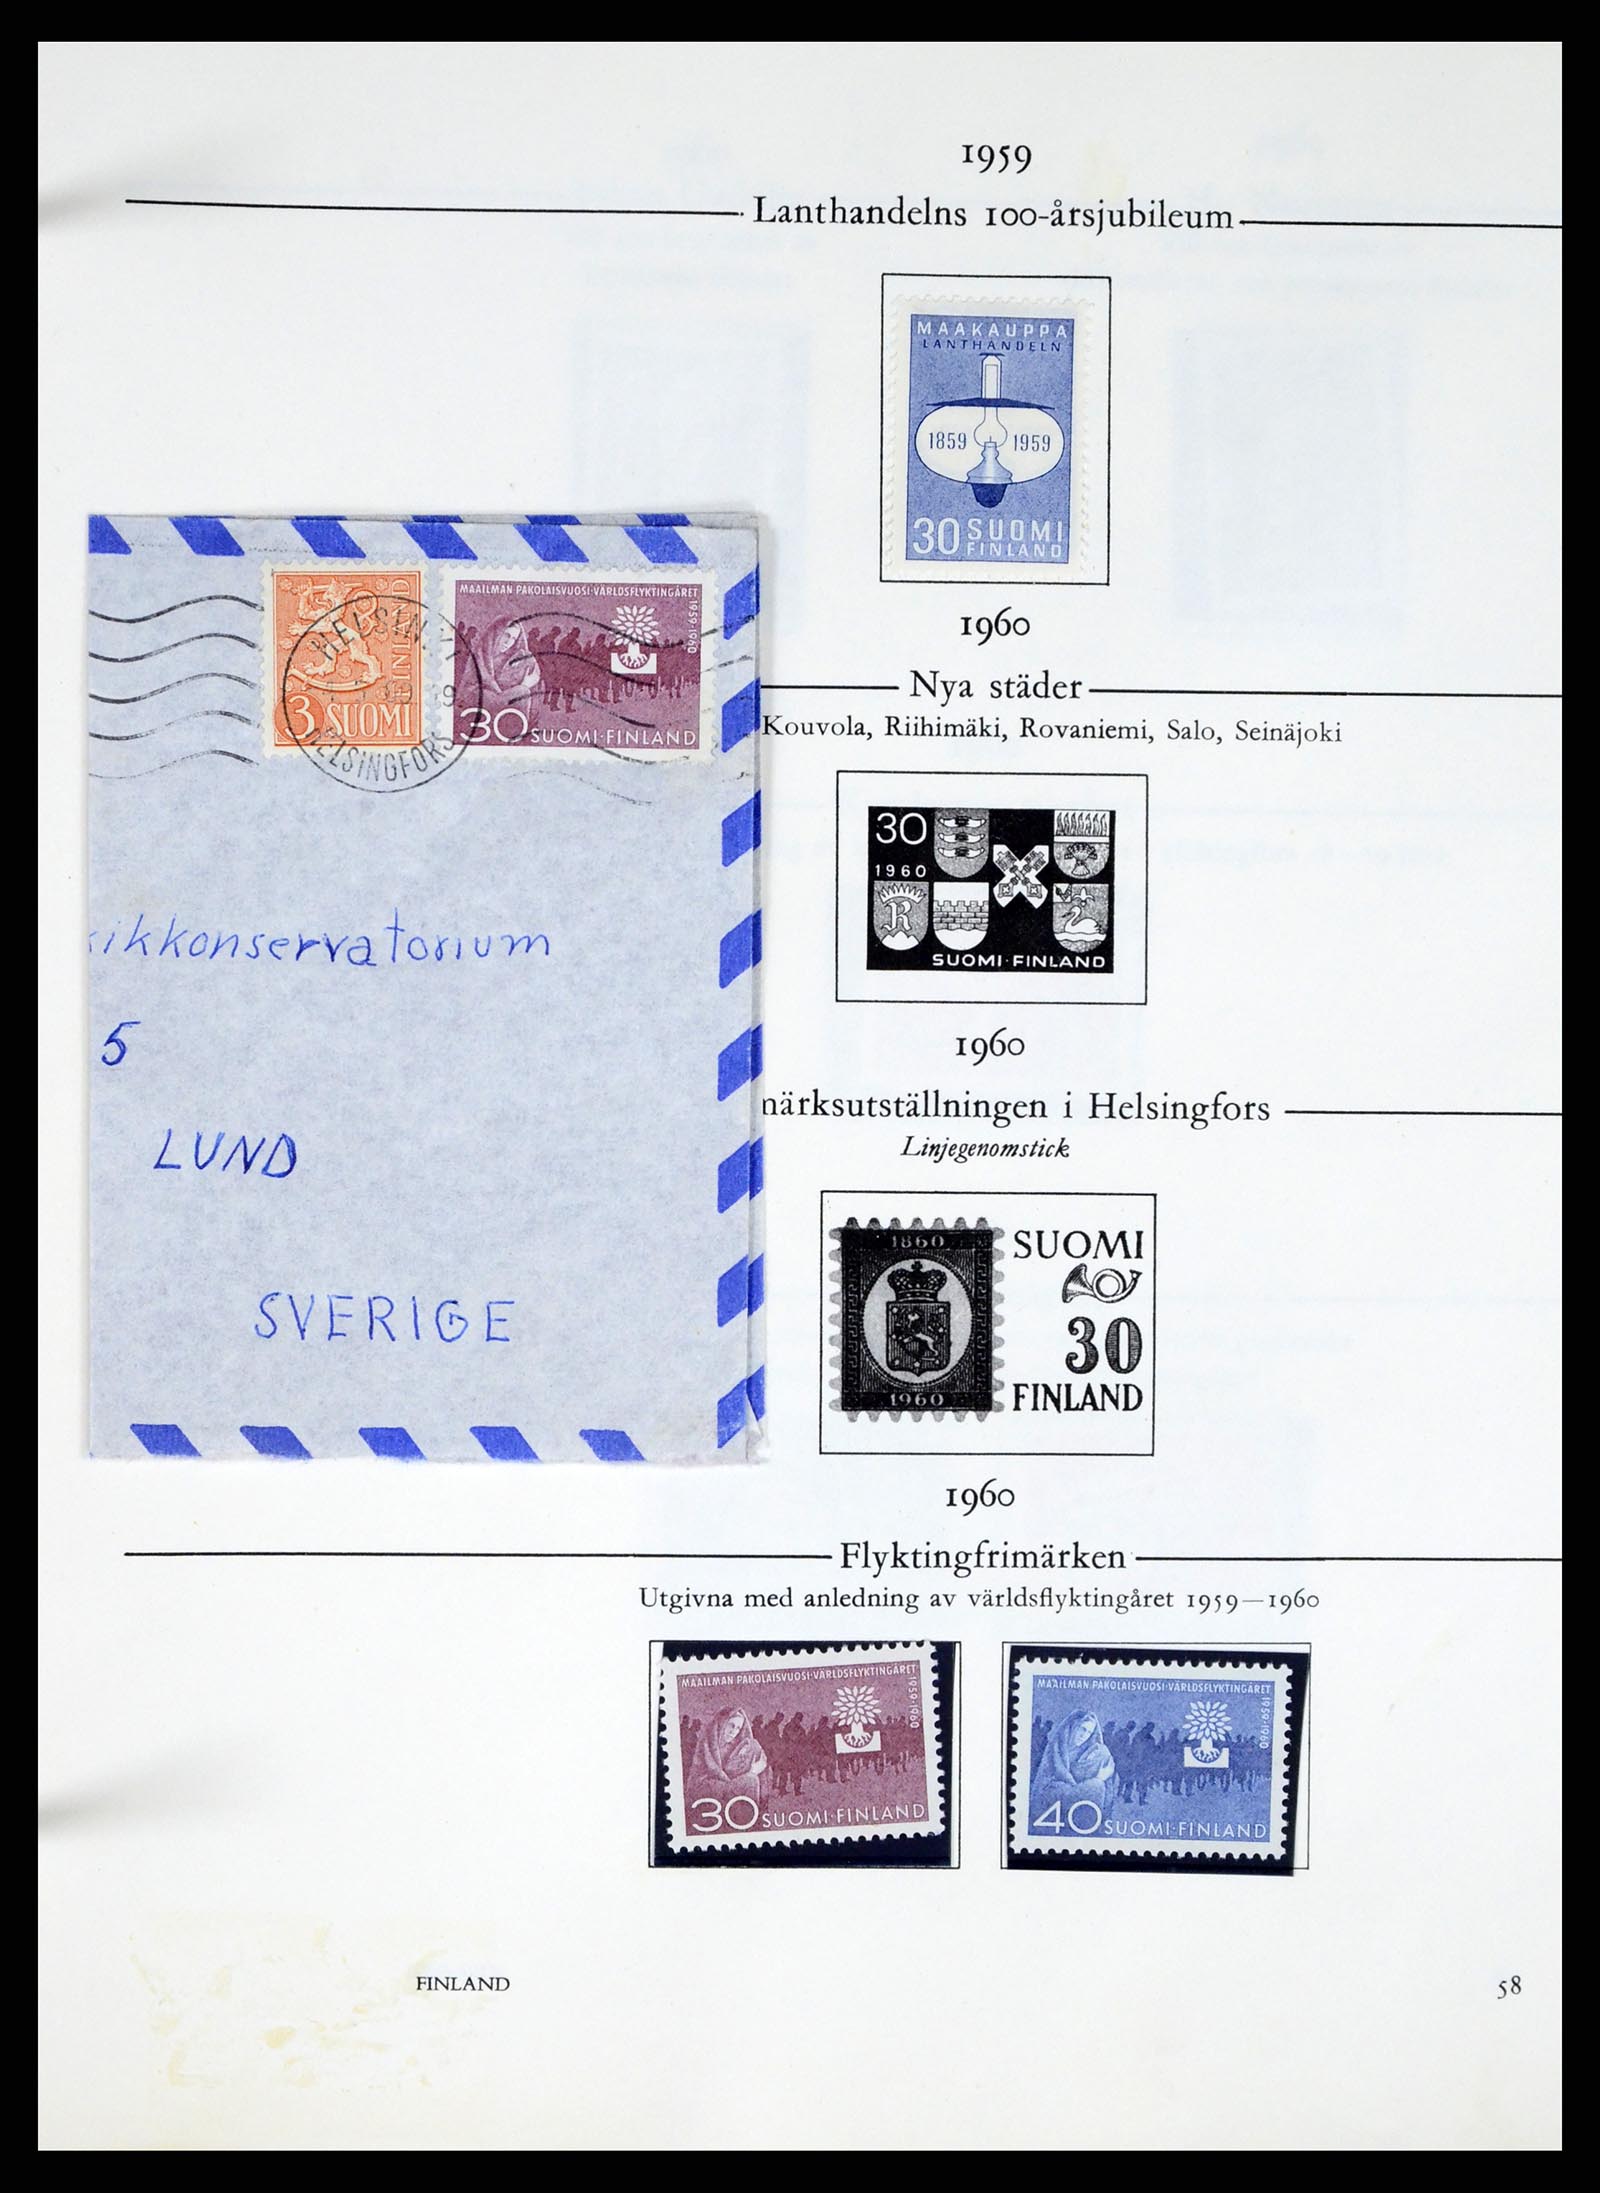 37387 223 - Stamp collection 37387 Scandinavia 1851-1960.